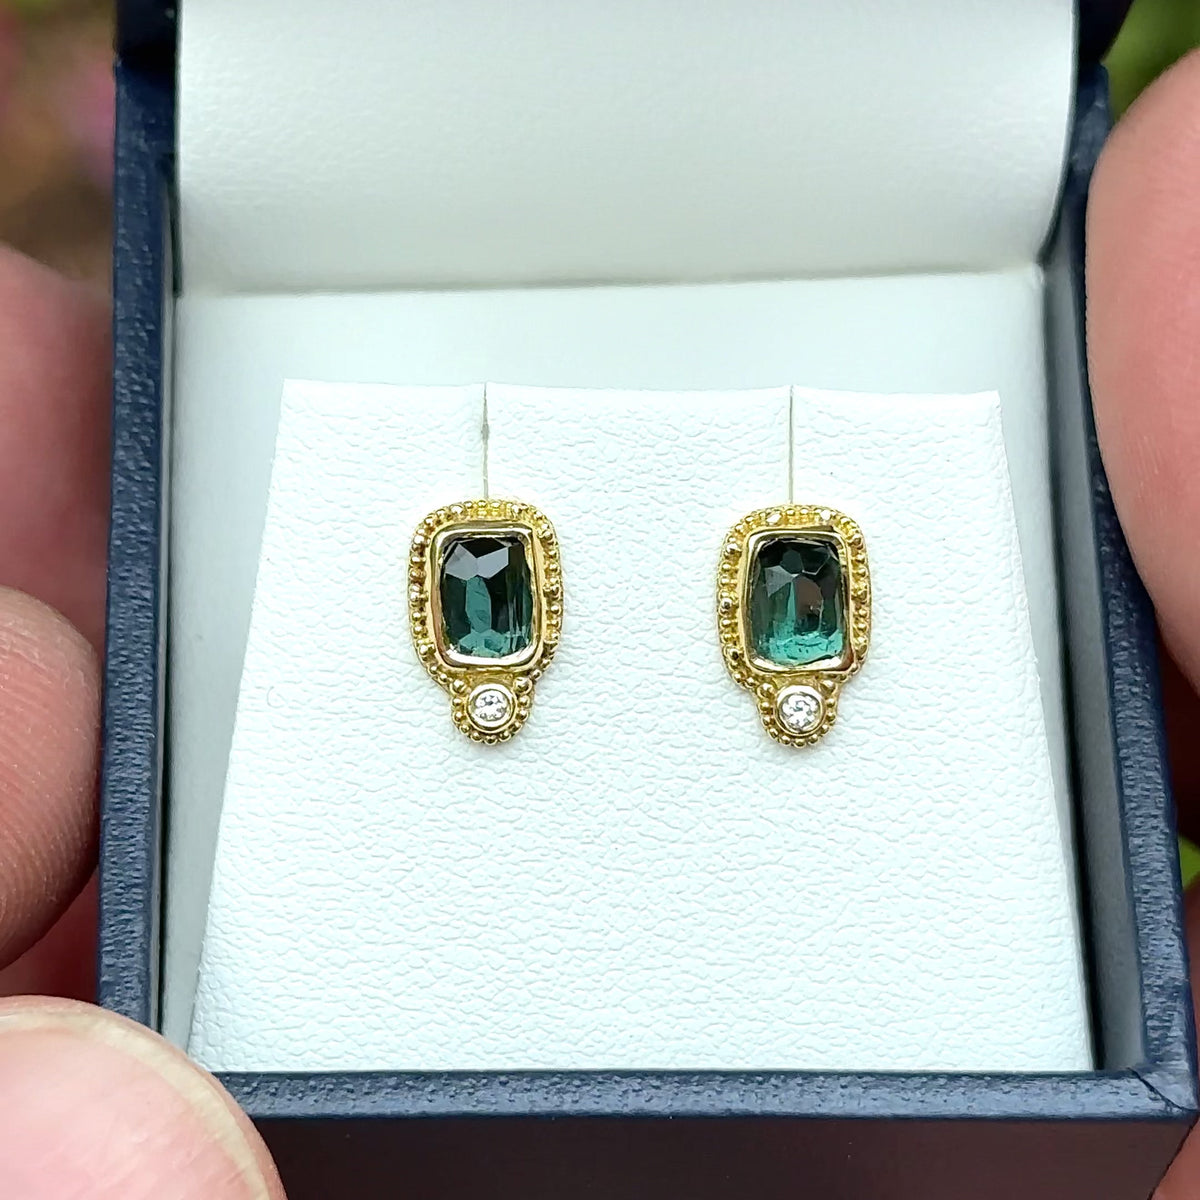 Sea-Green Tourmaline Earrings with diamonds in granulated 18K Treasure Gold